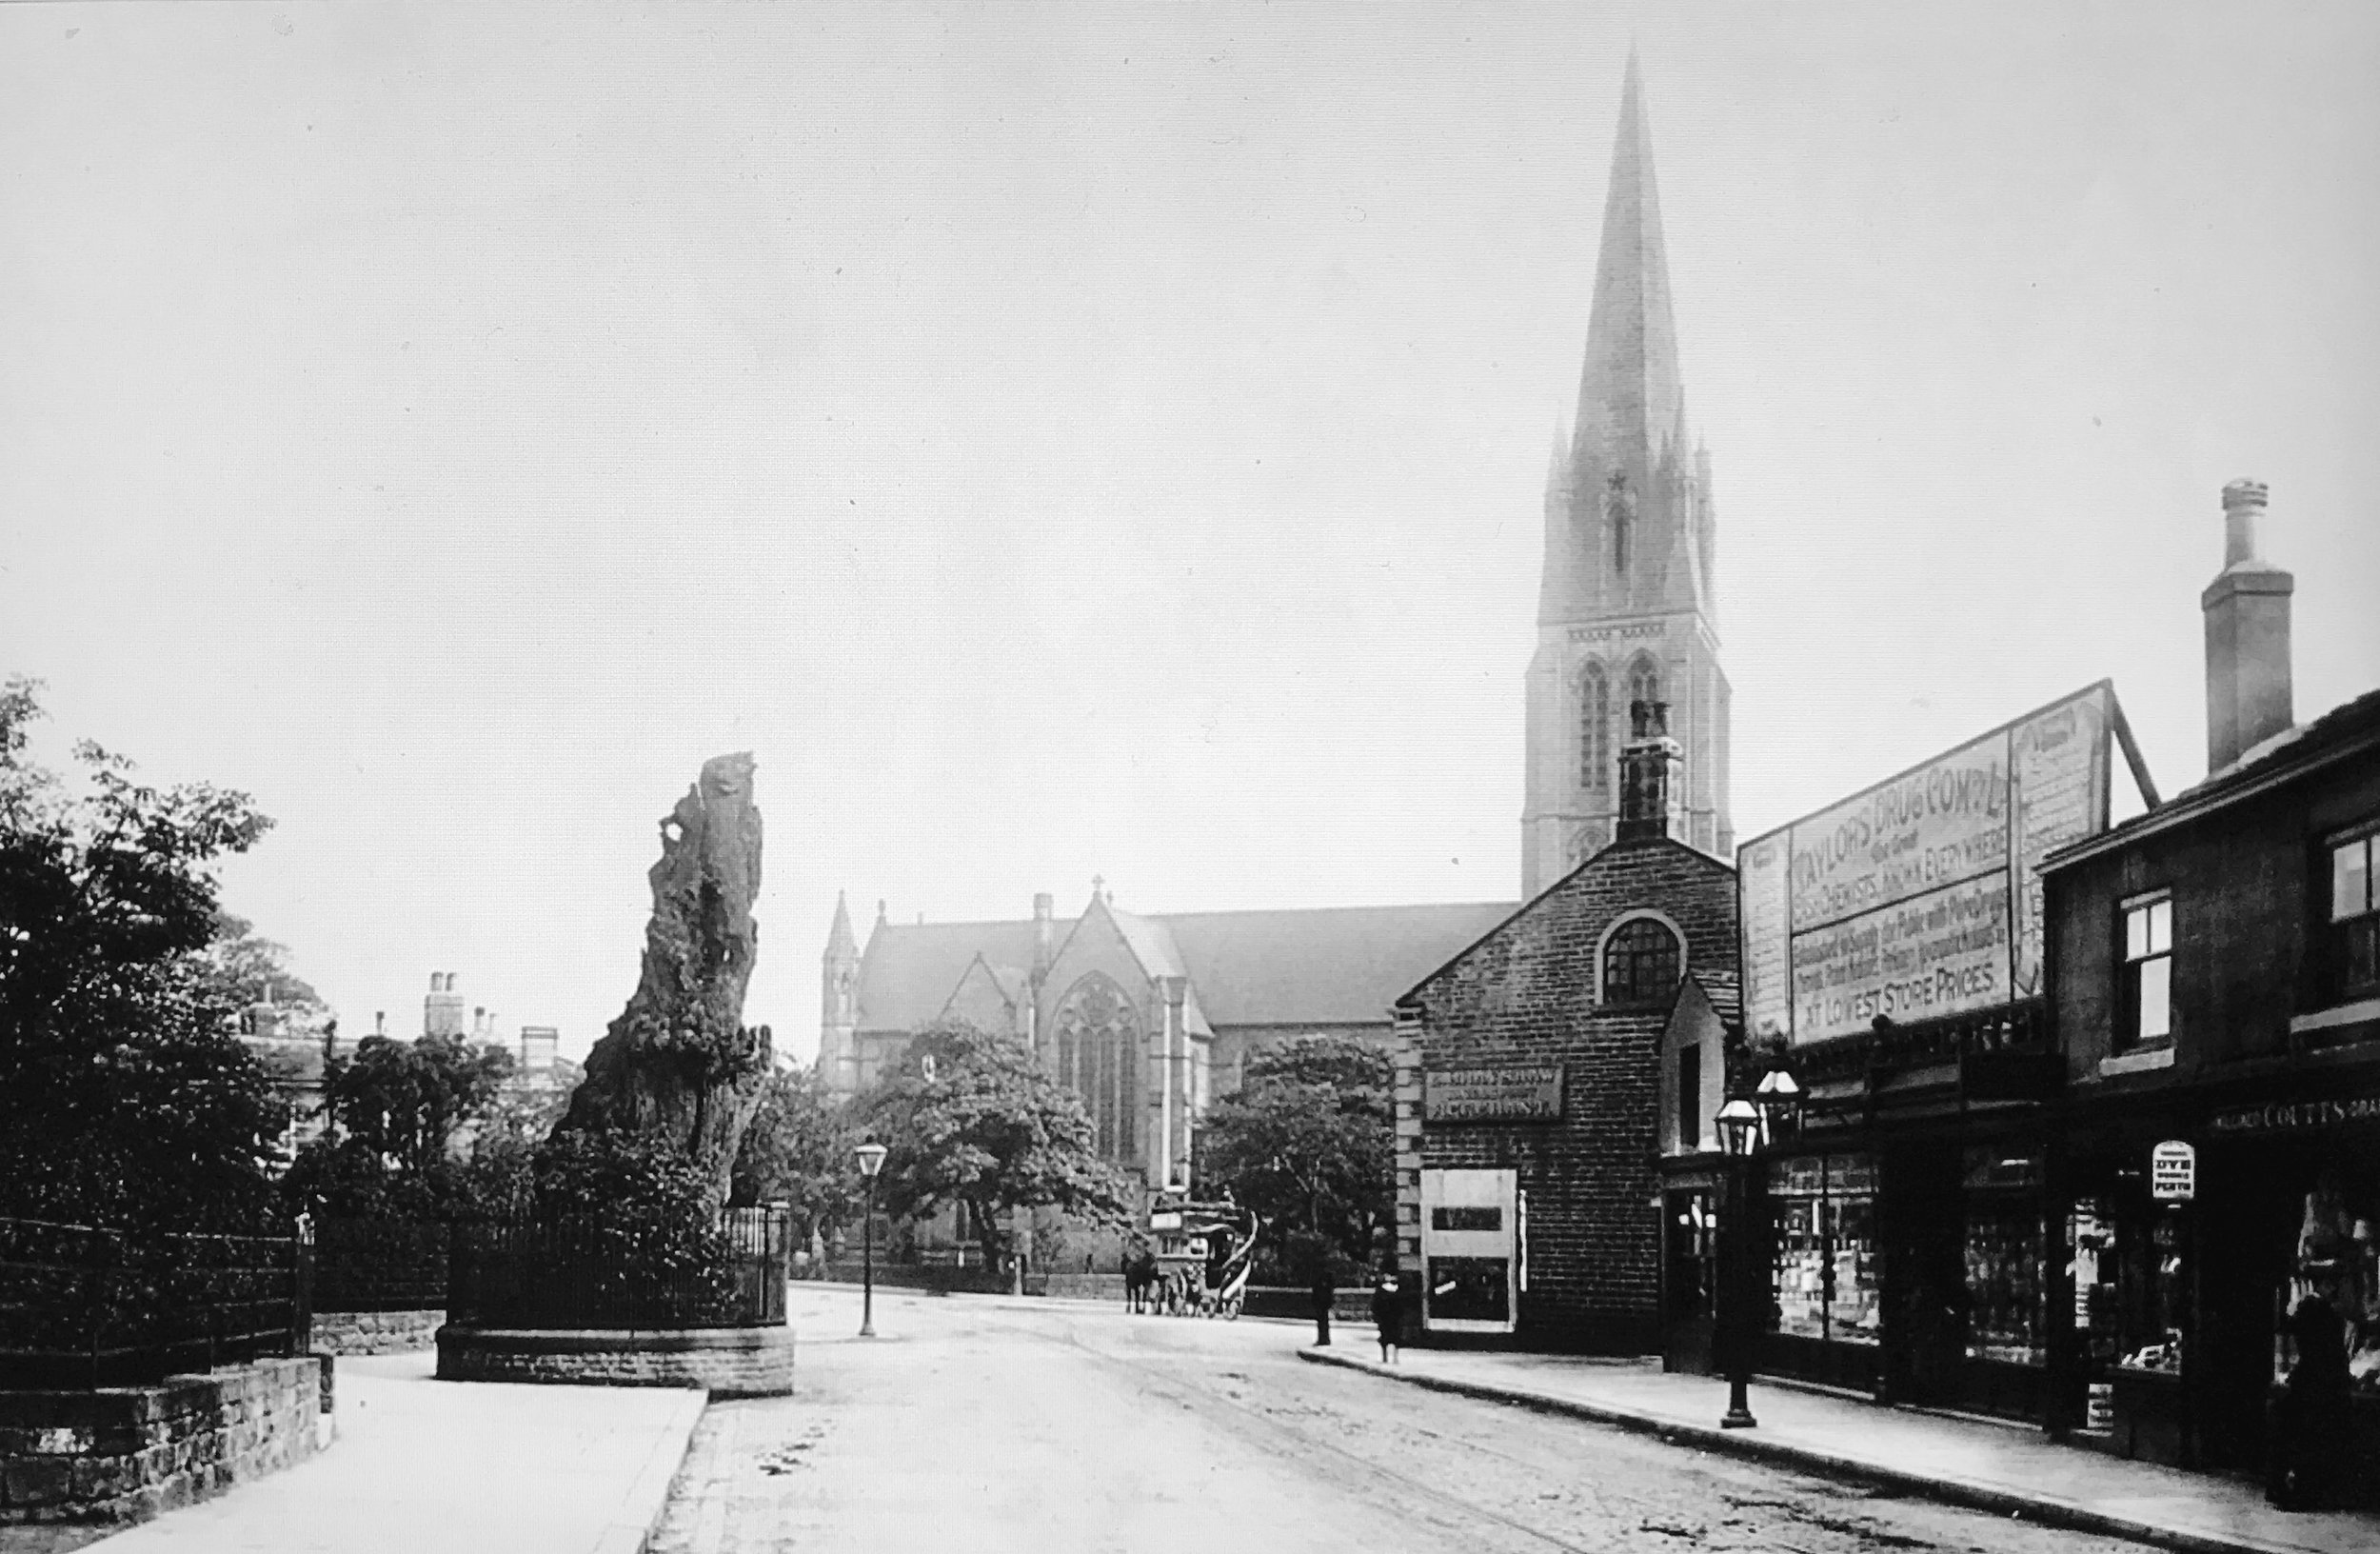 St Michael's Church and Skyrack Inn, 1897